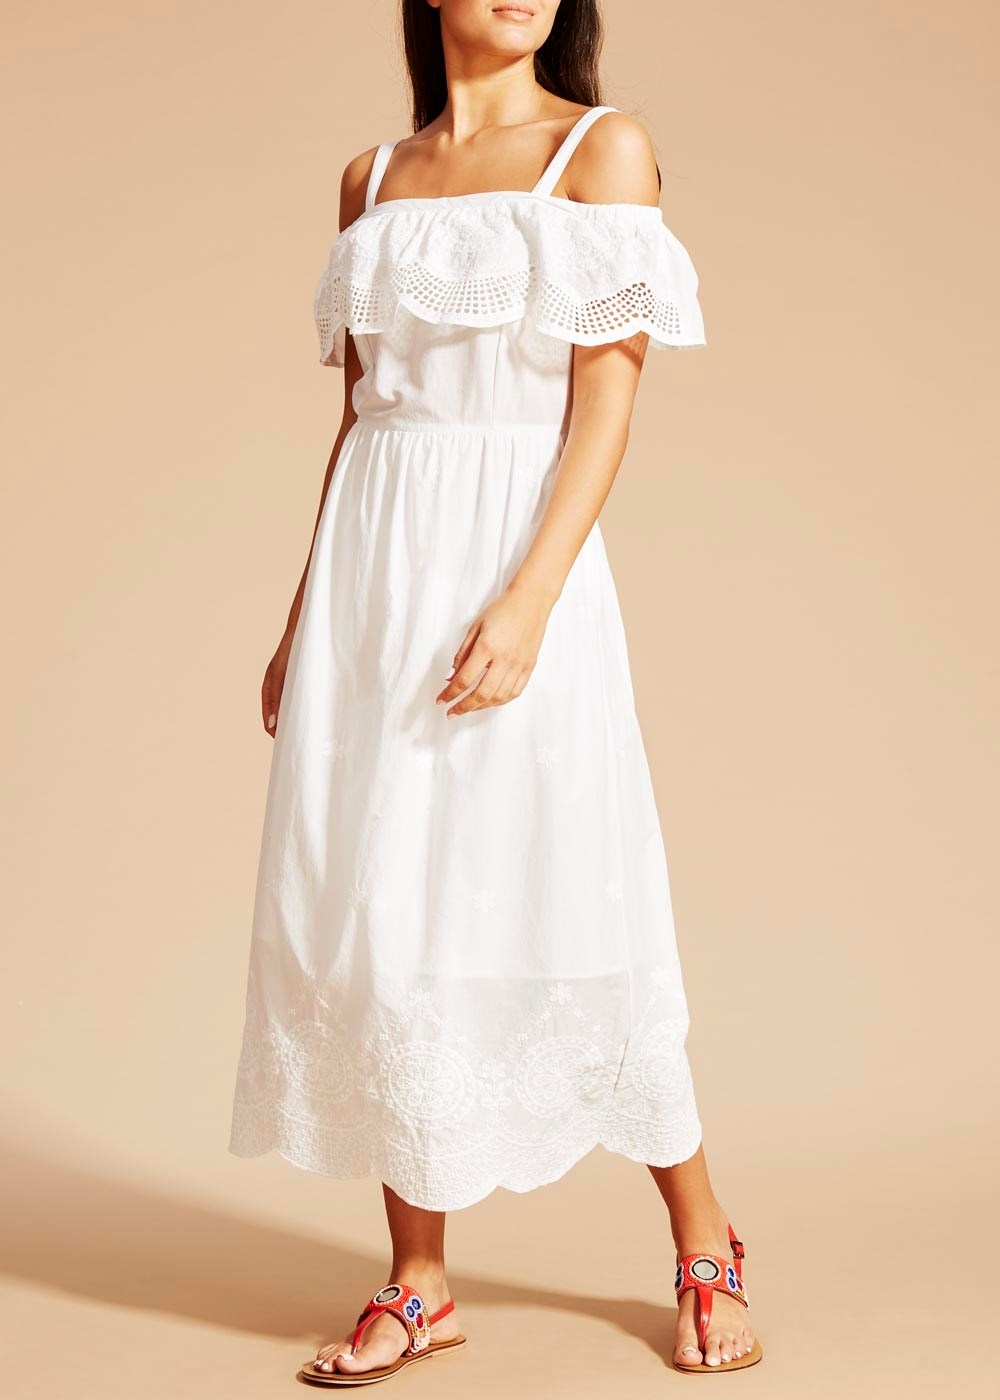 calvin klein white floral dress